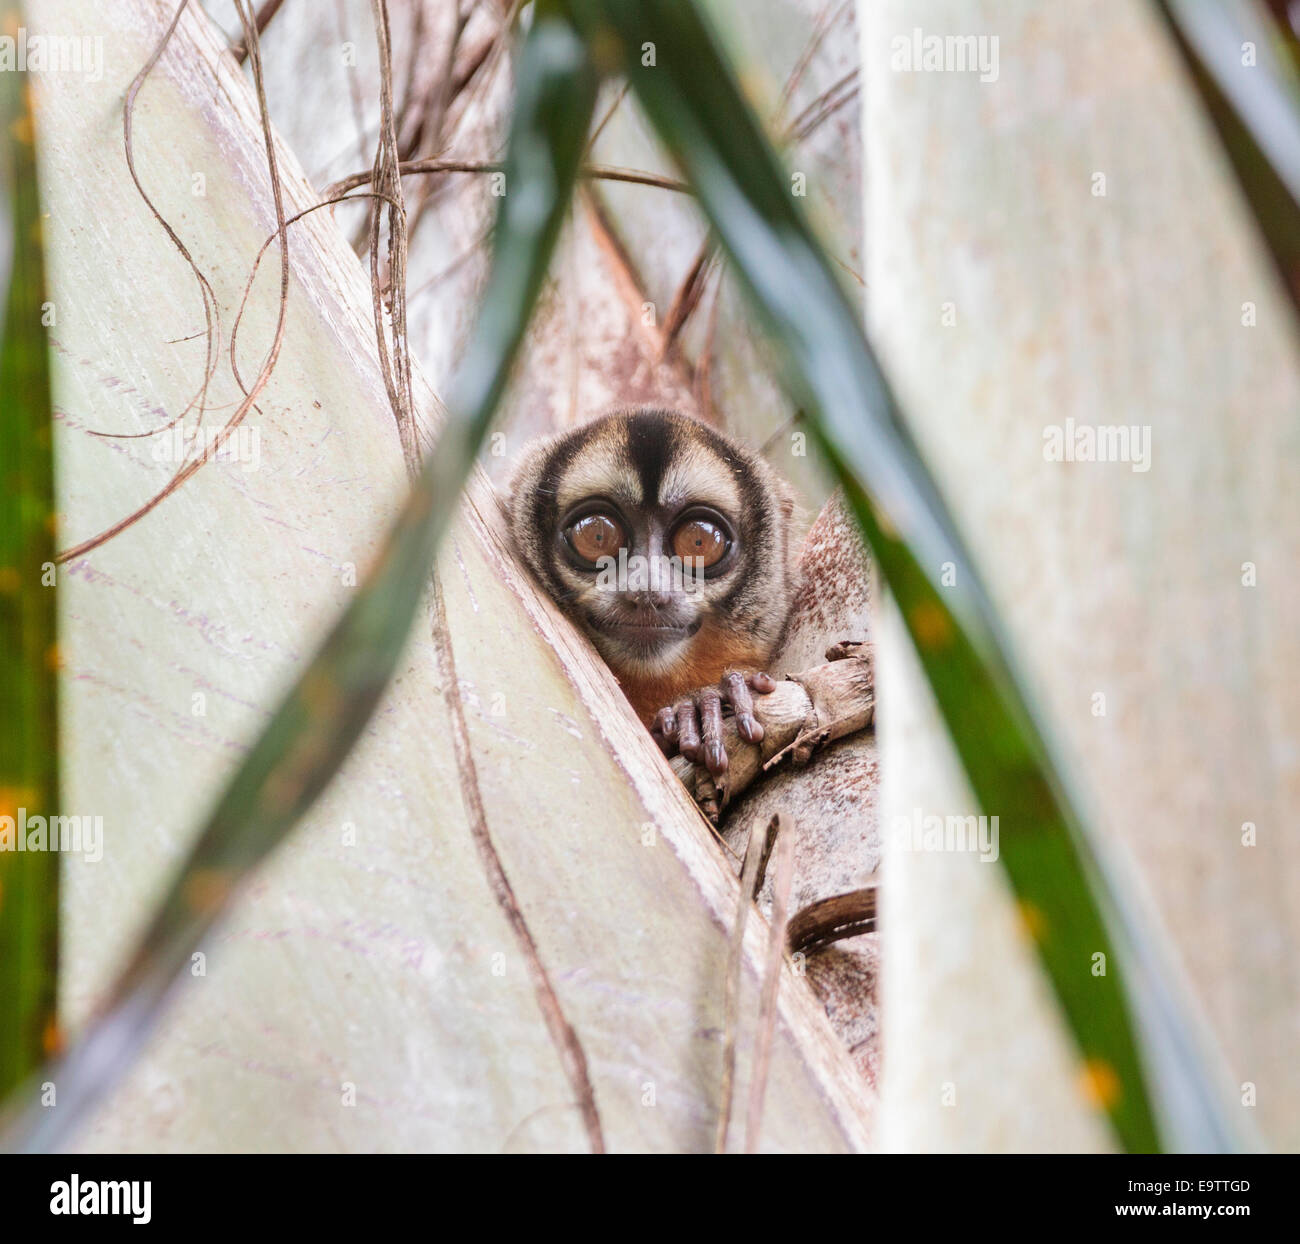 An Owl monkey in a tree, Peru. Stock Photo